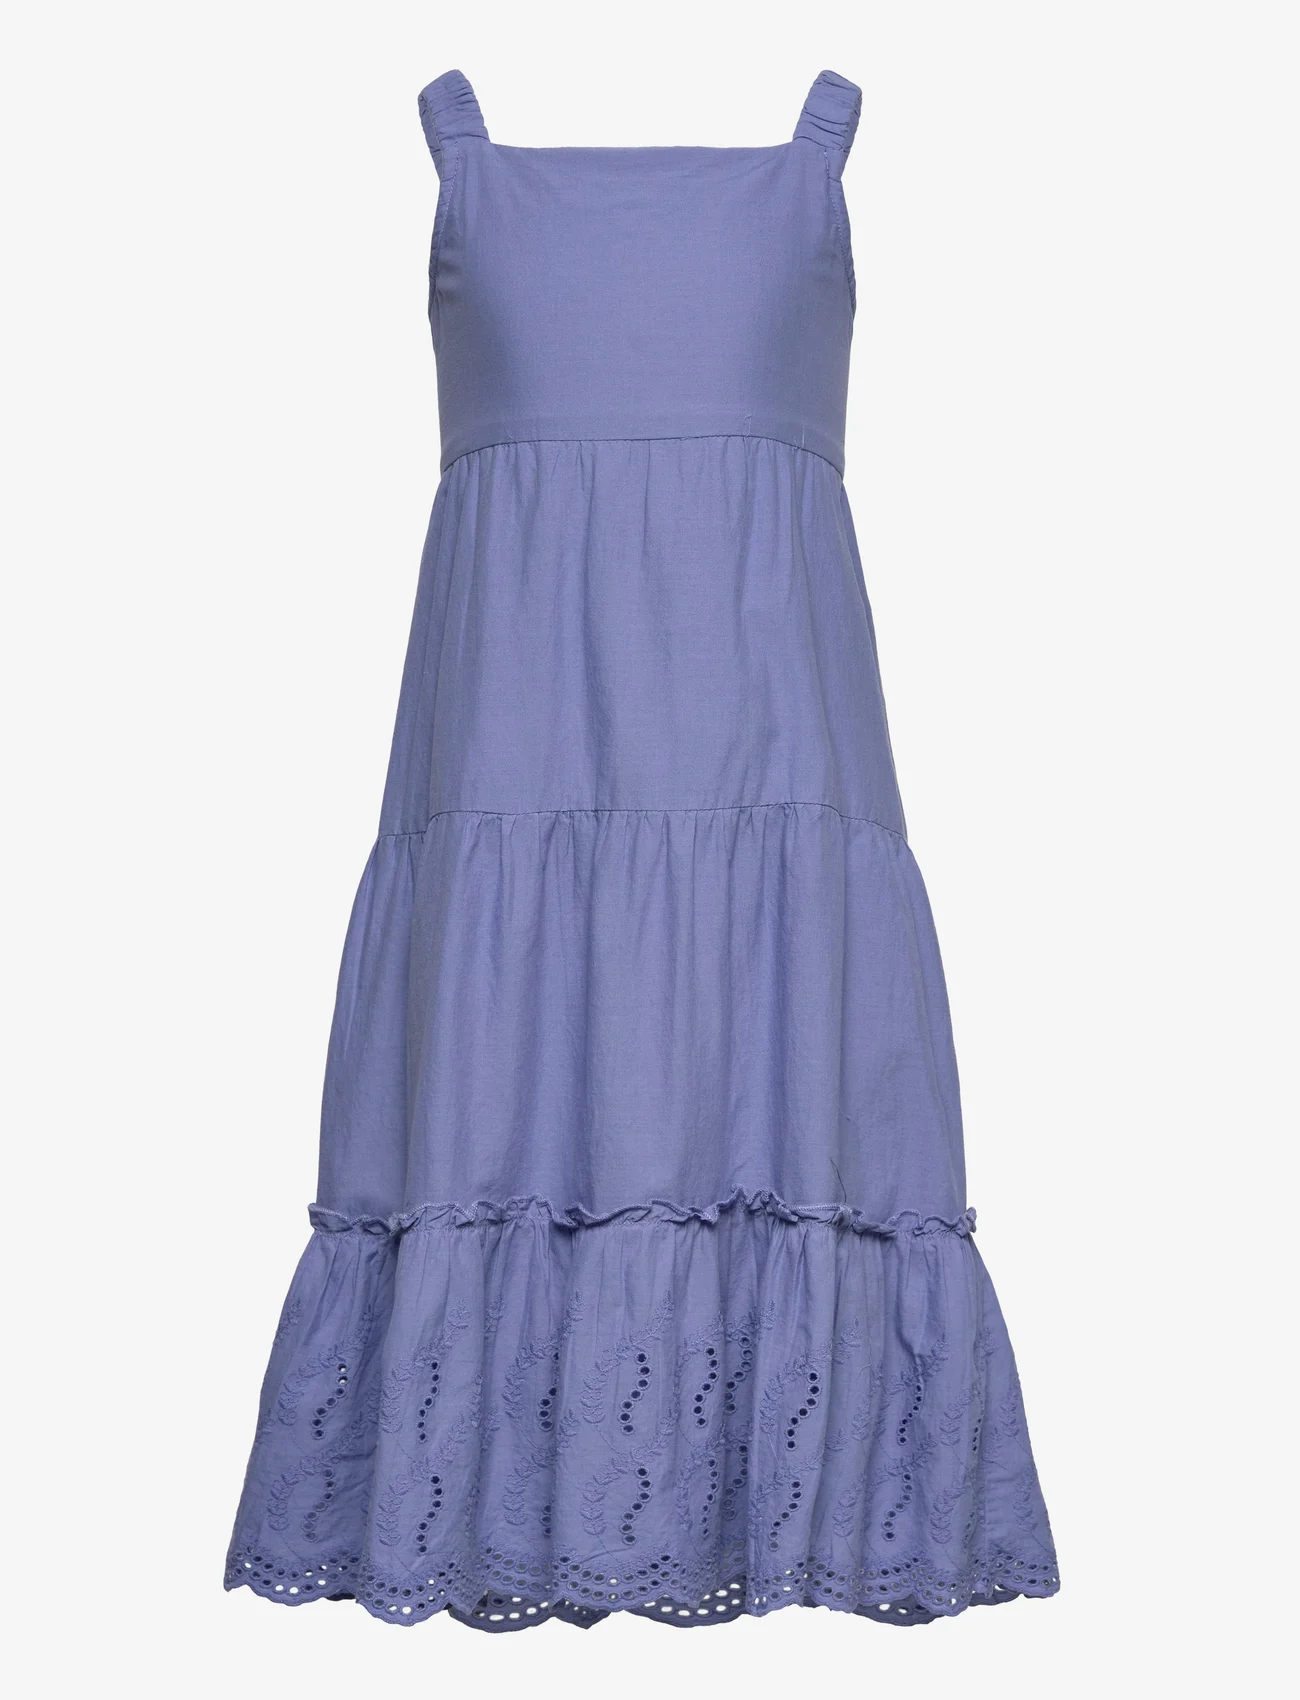 Creamie - Dress Embroidery - Ärmellose freizeitkleider - colony blue - 1